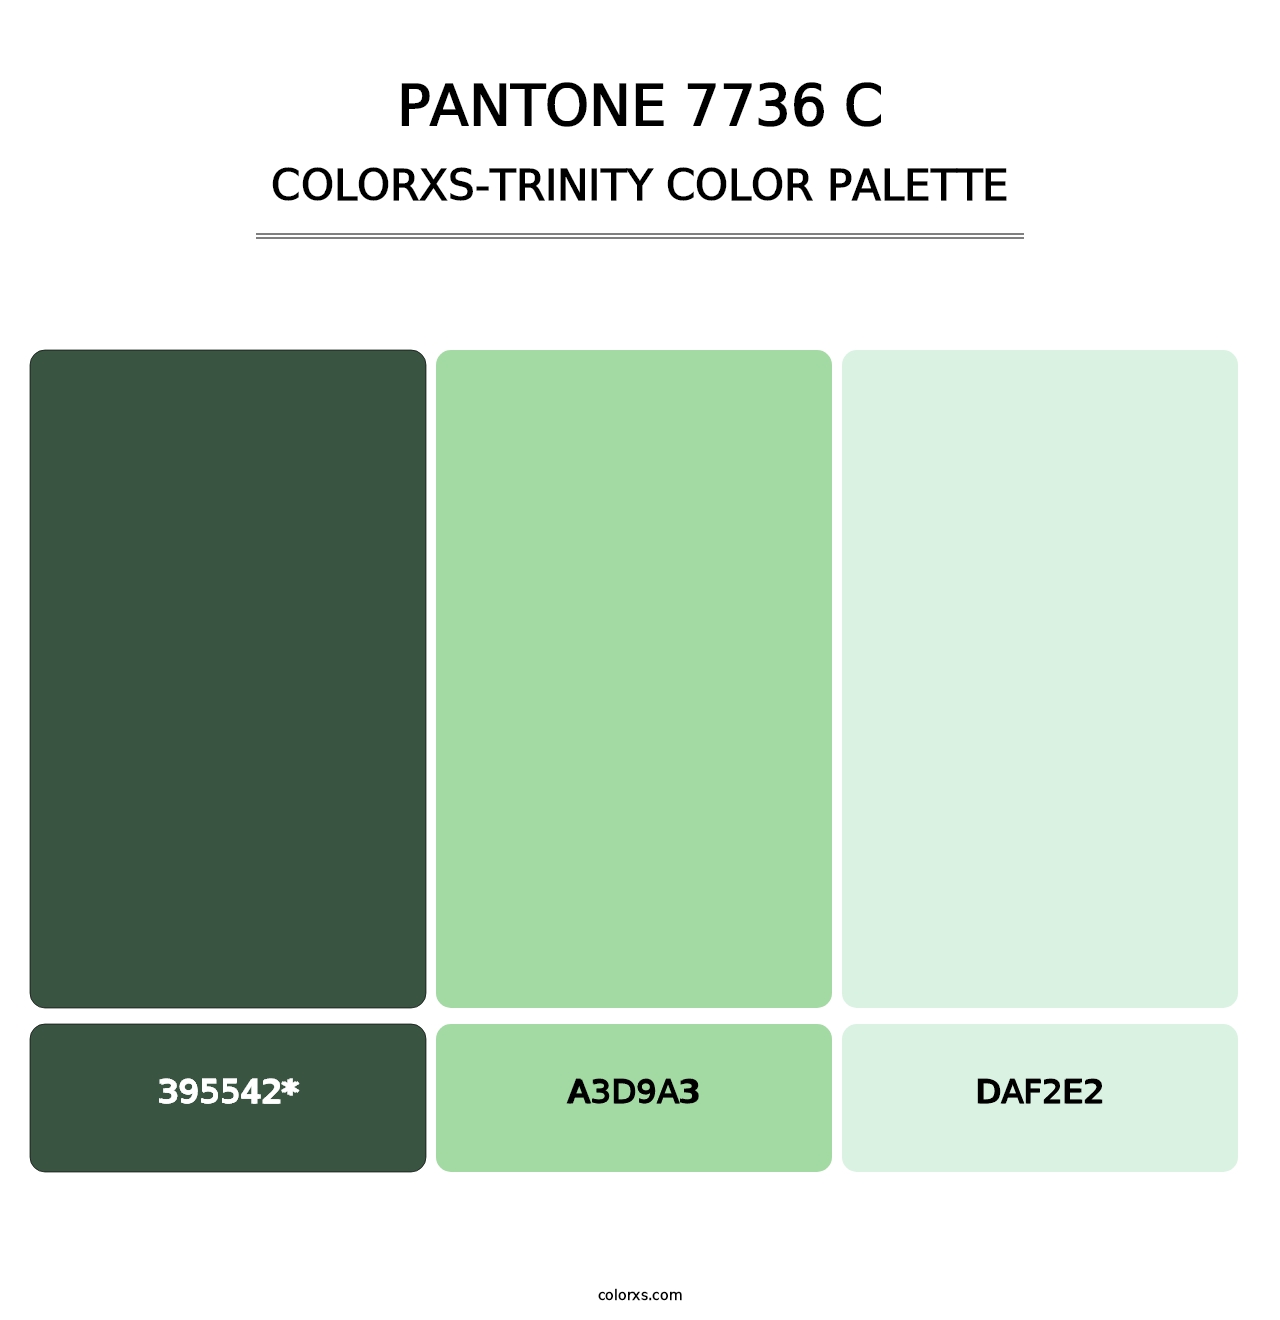 PANTONE 7736 C - Colorxs Trinity Palette